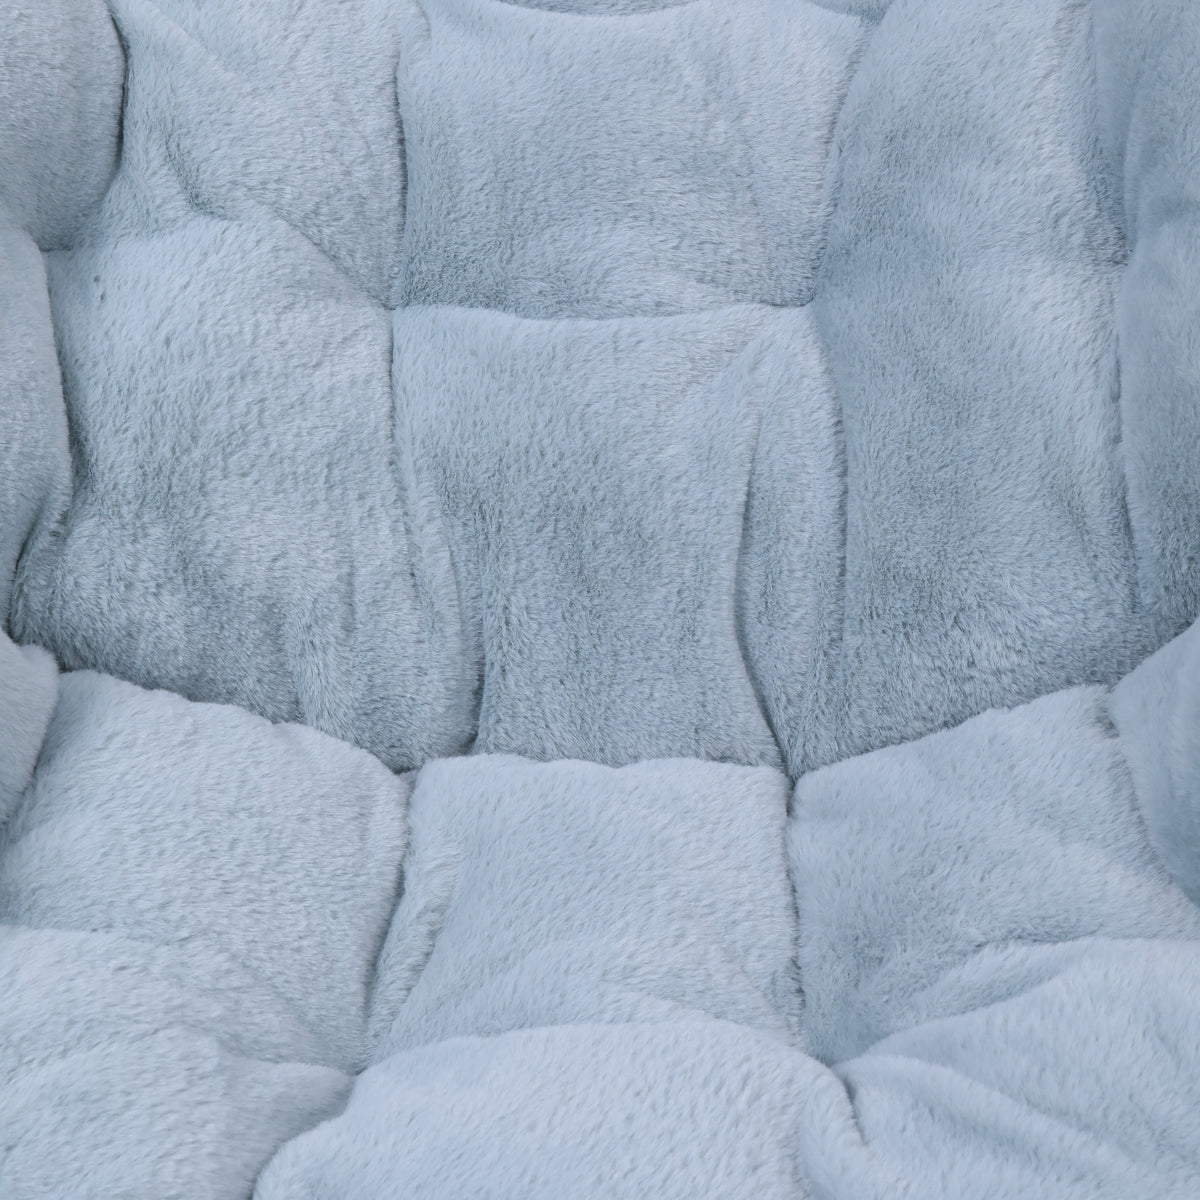 Aqua Fabric/Soft Gold Frame |#| Folding Faux Fur Oversized Saucer Chair with Steel Frame - Dusty Aqua/Soft Gold